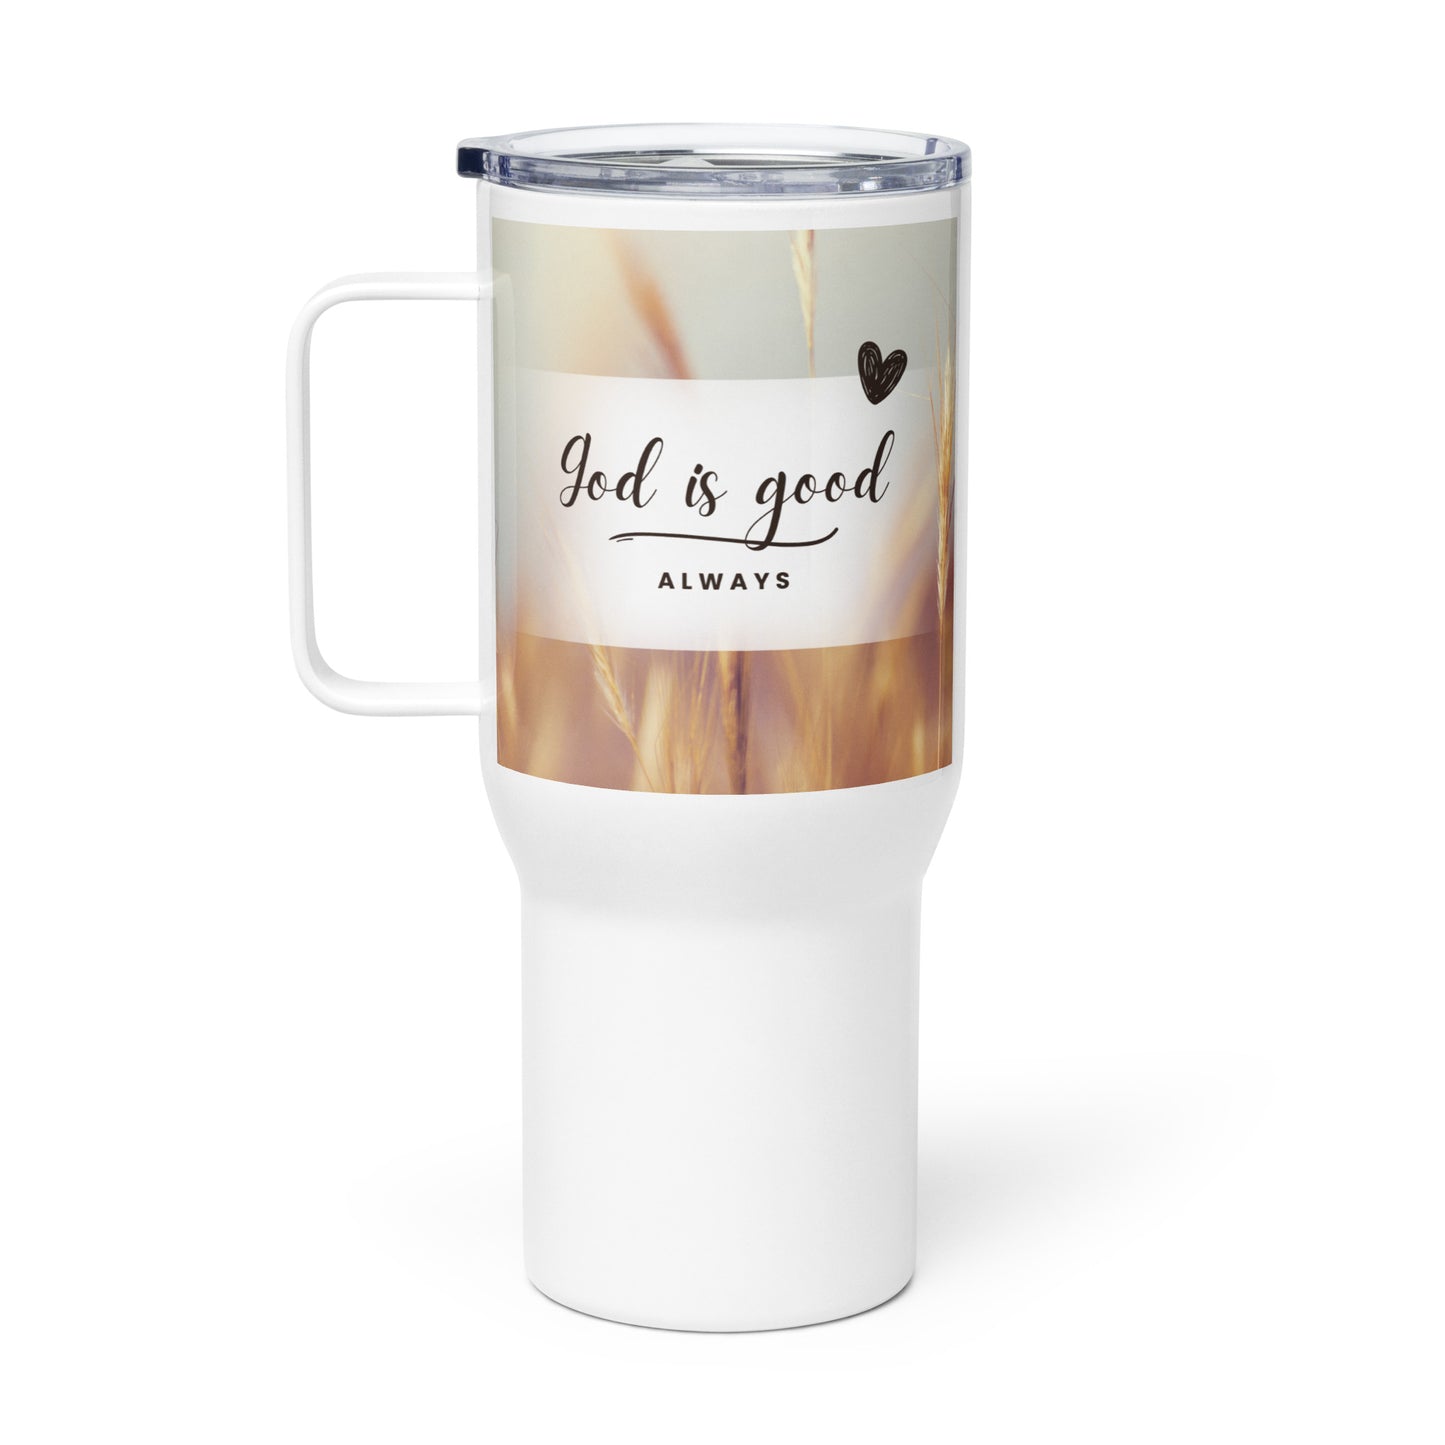 God is Good ALWAYS Travel mug with a handle